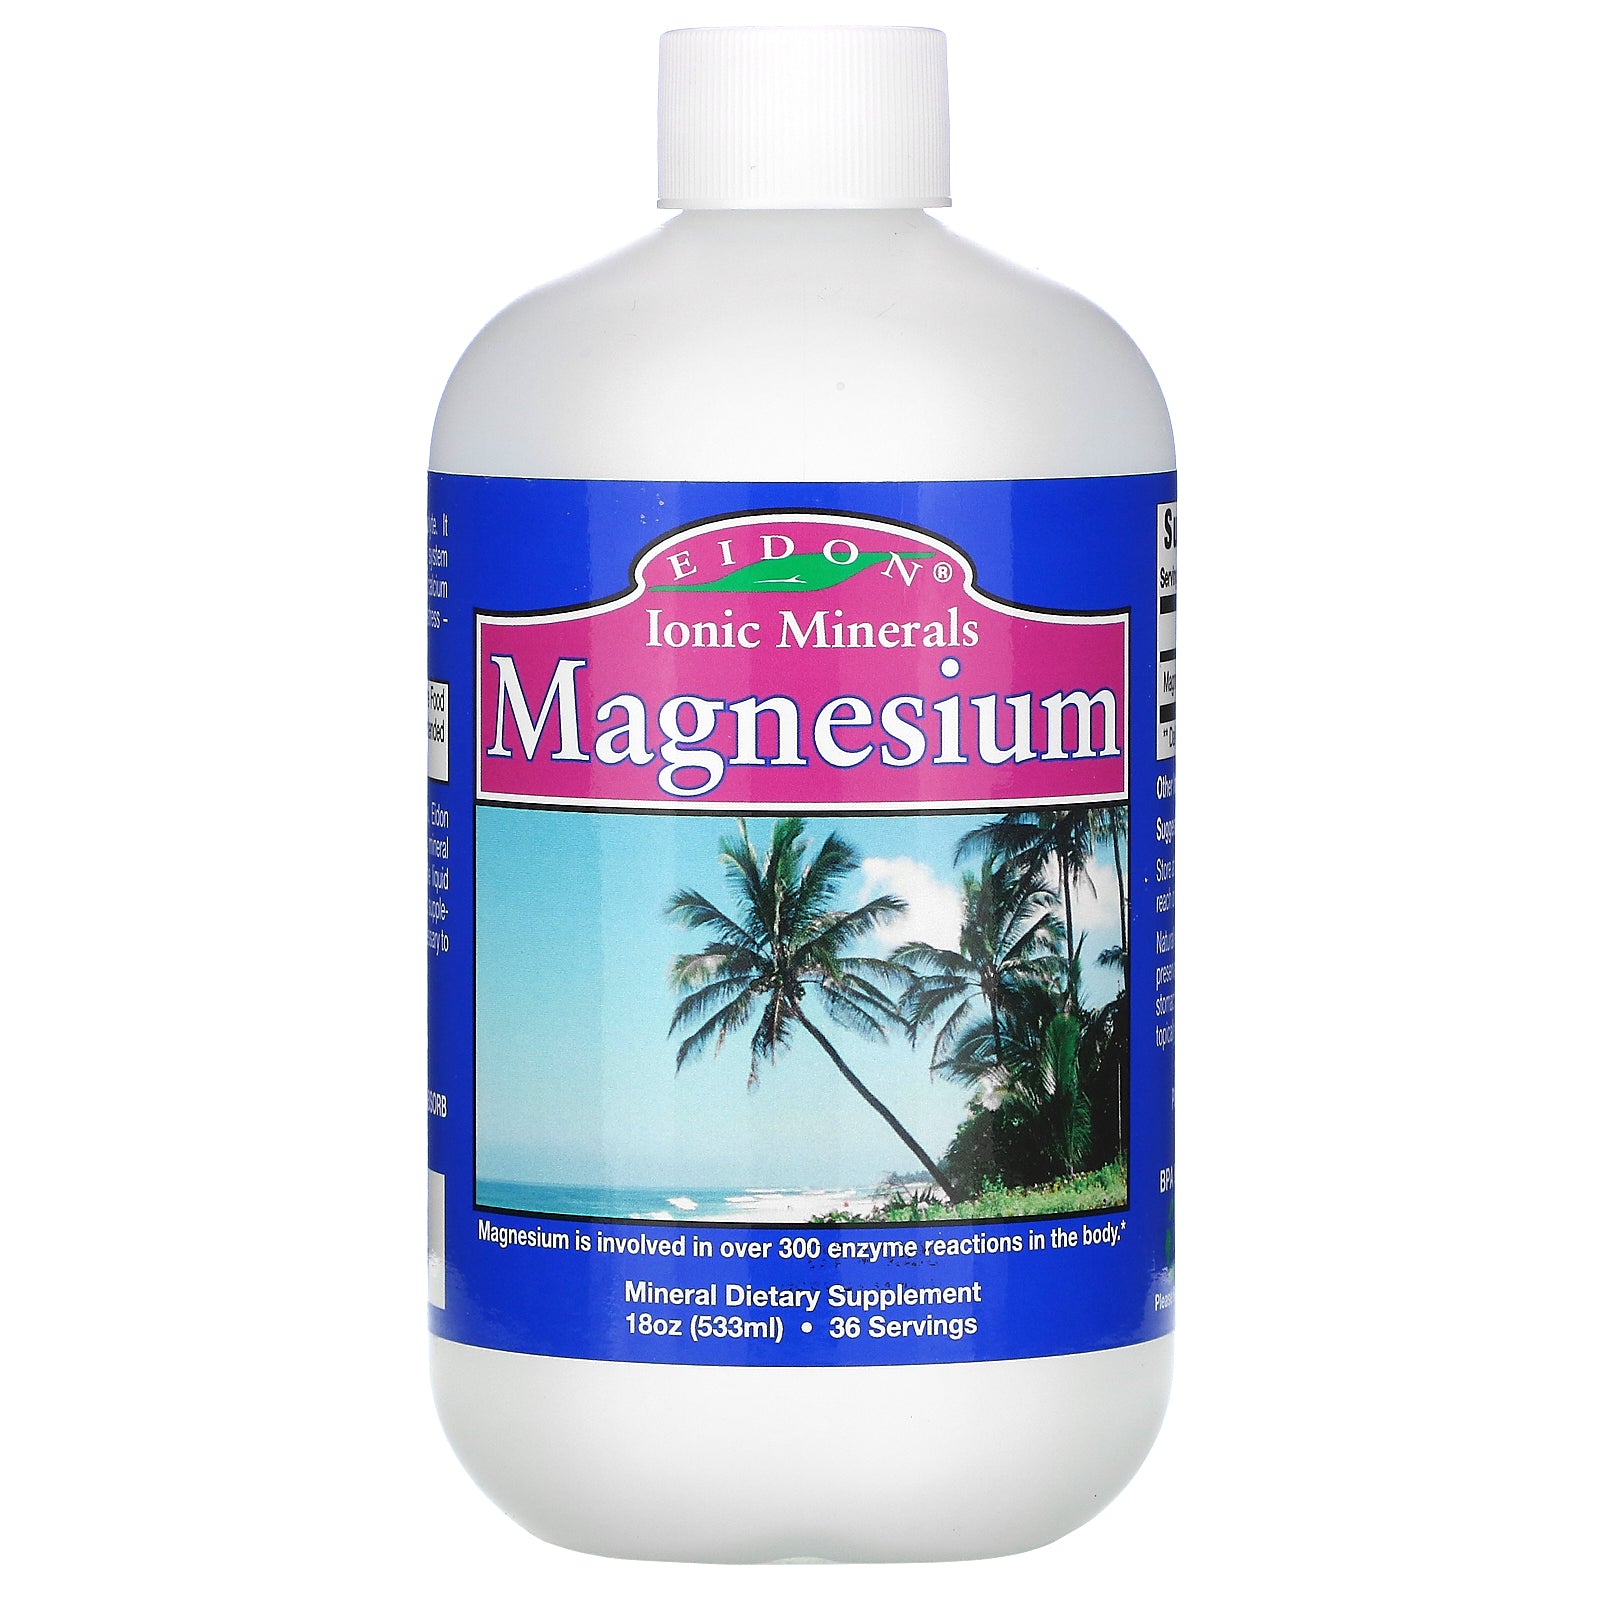 Eidon Mineral Supplements, Magnesium, 18 oz (533 ml)